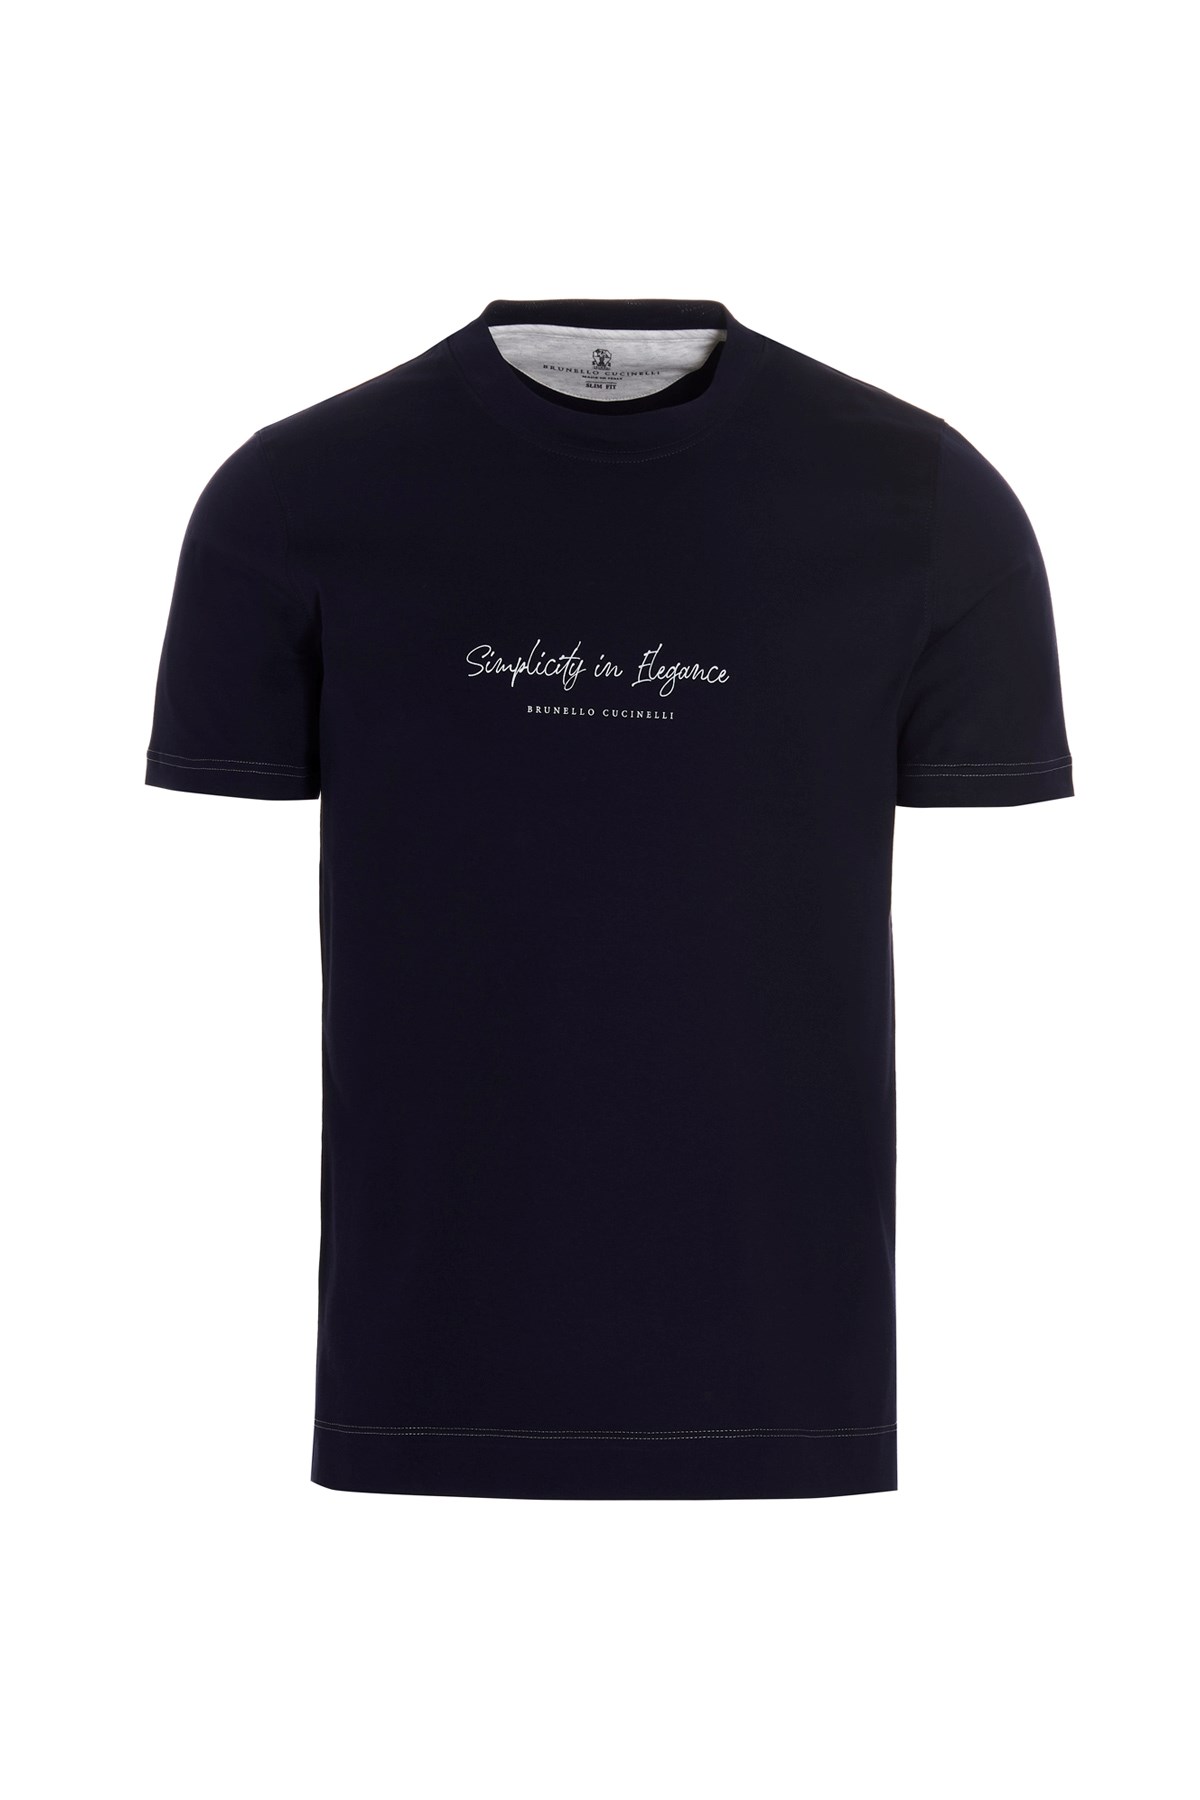 BRUNELLO CUCINELLI 'Simplicity And Elegance’ T-Shirt